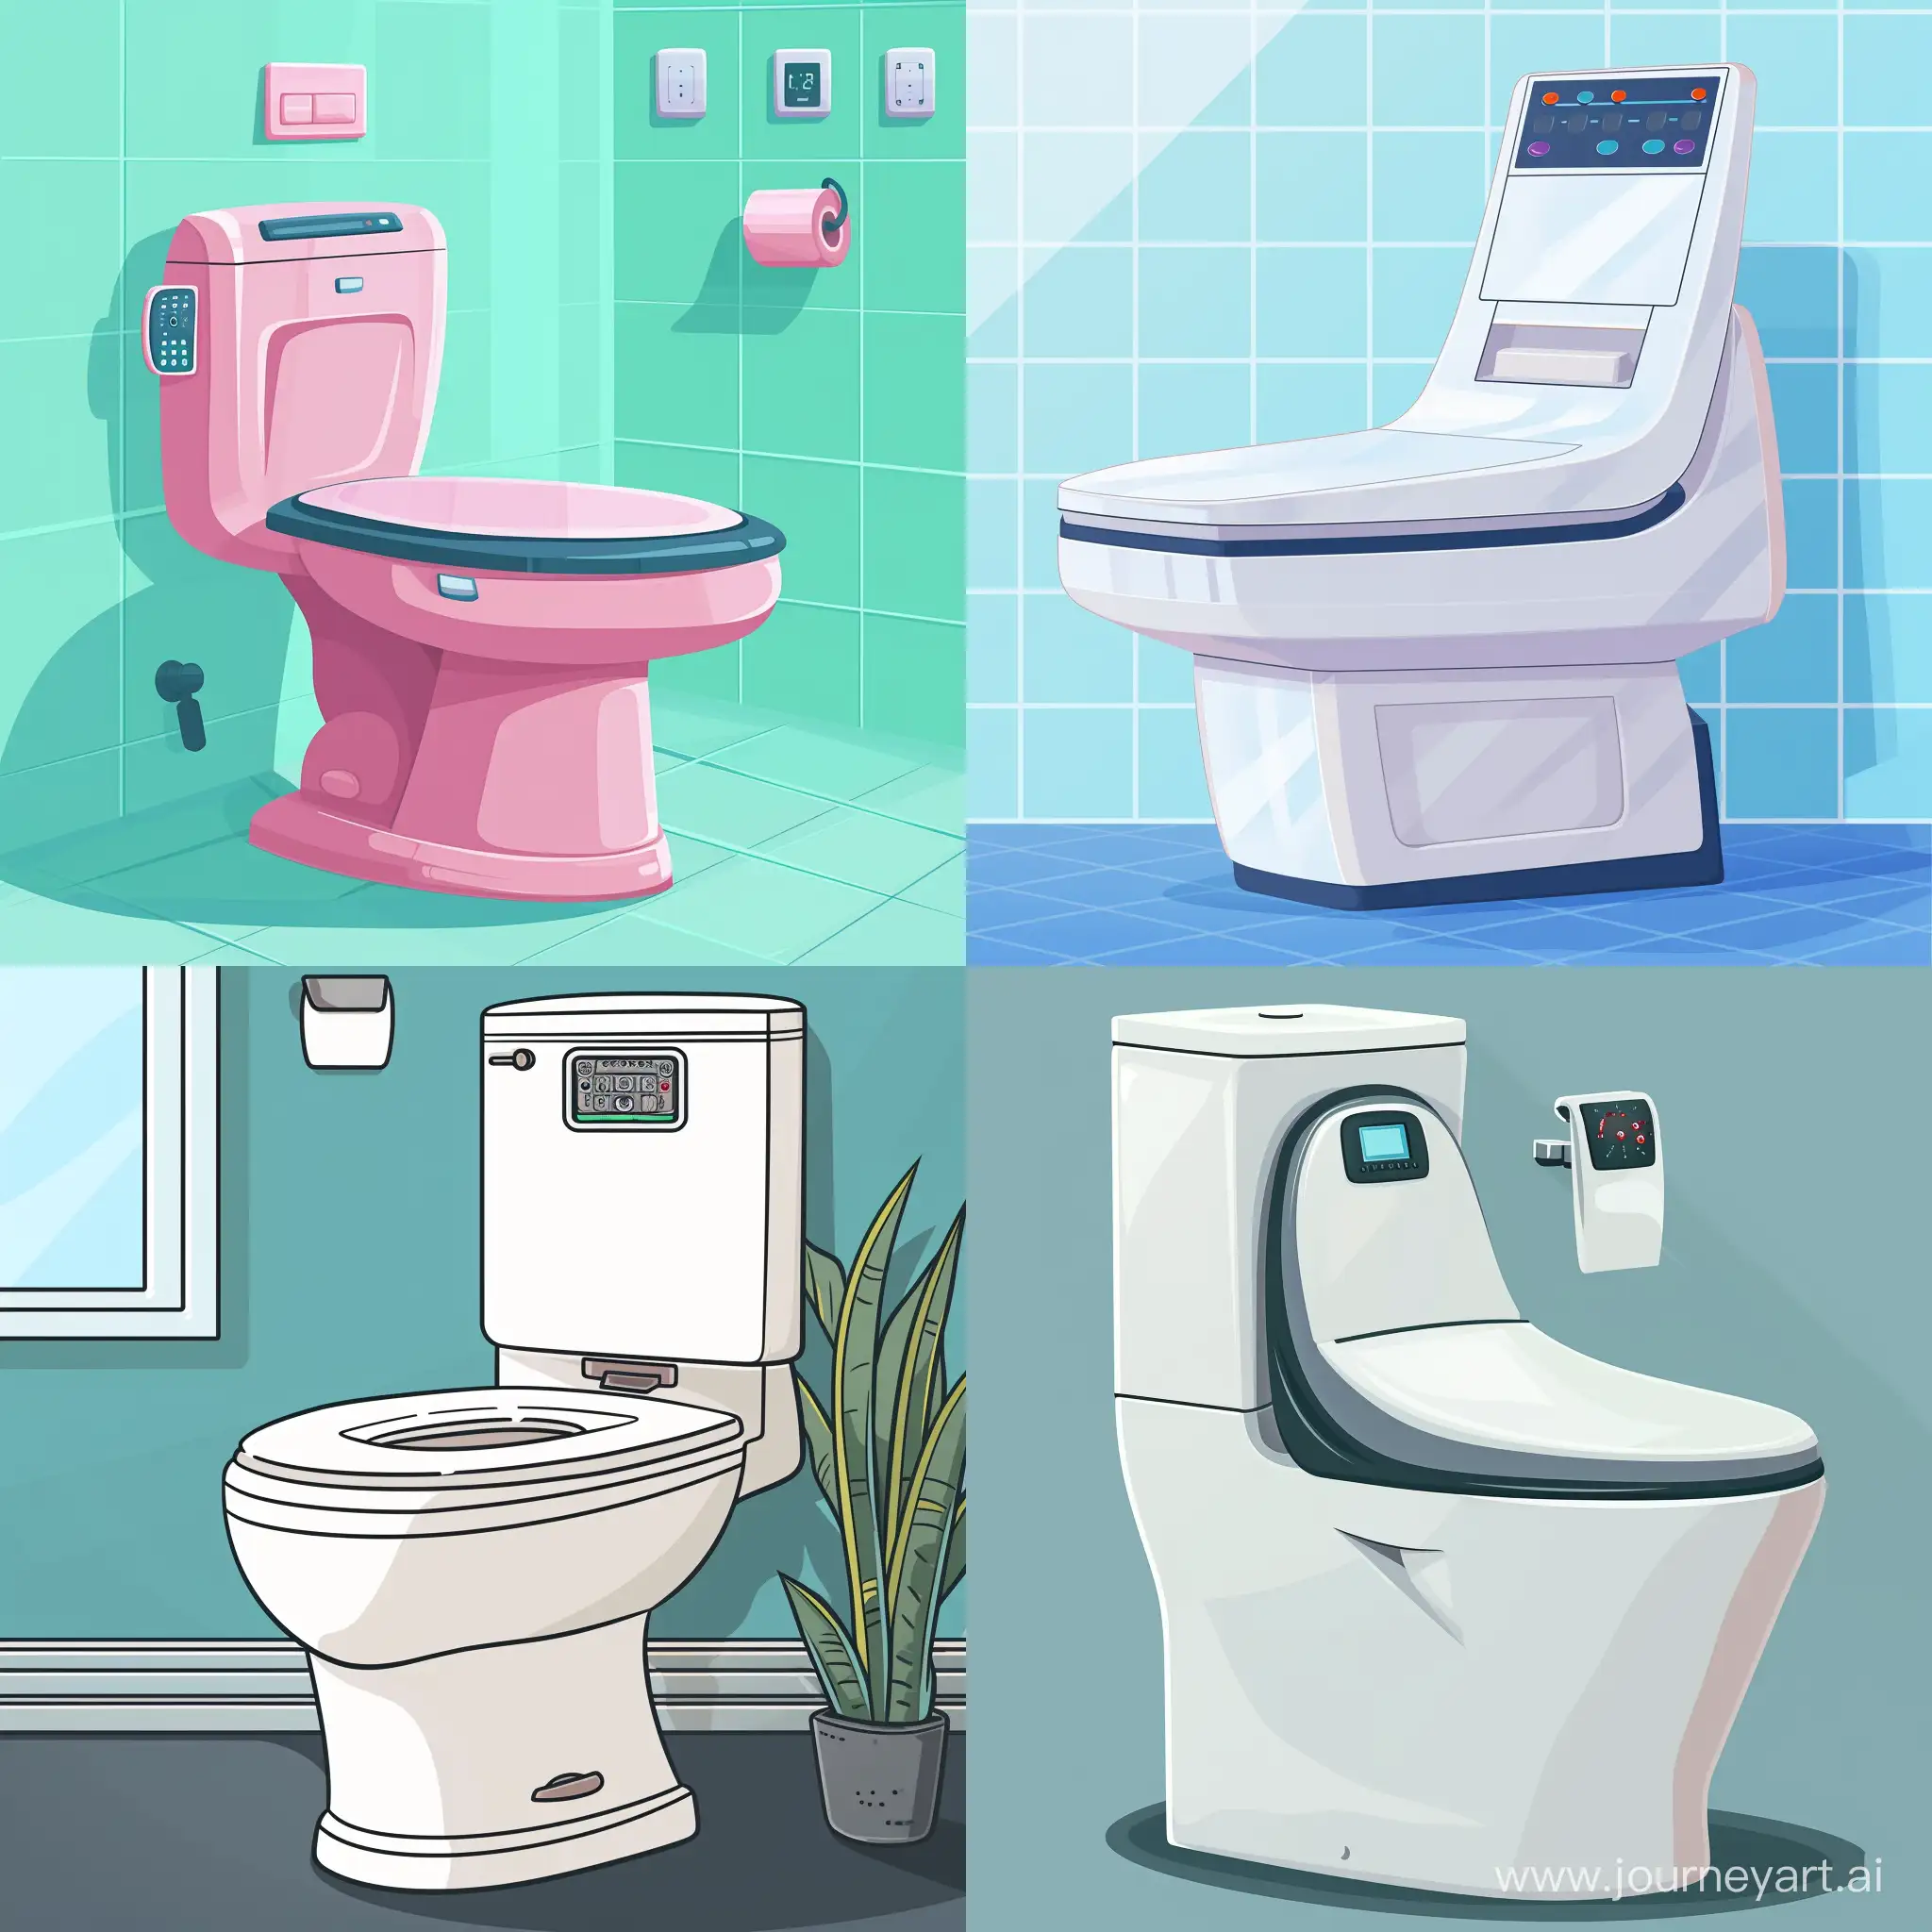 Smart toilet cartoon image,